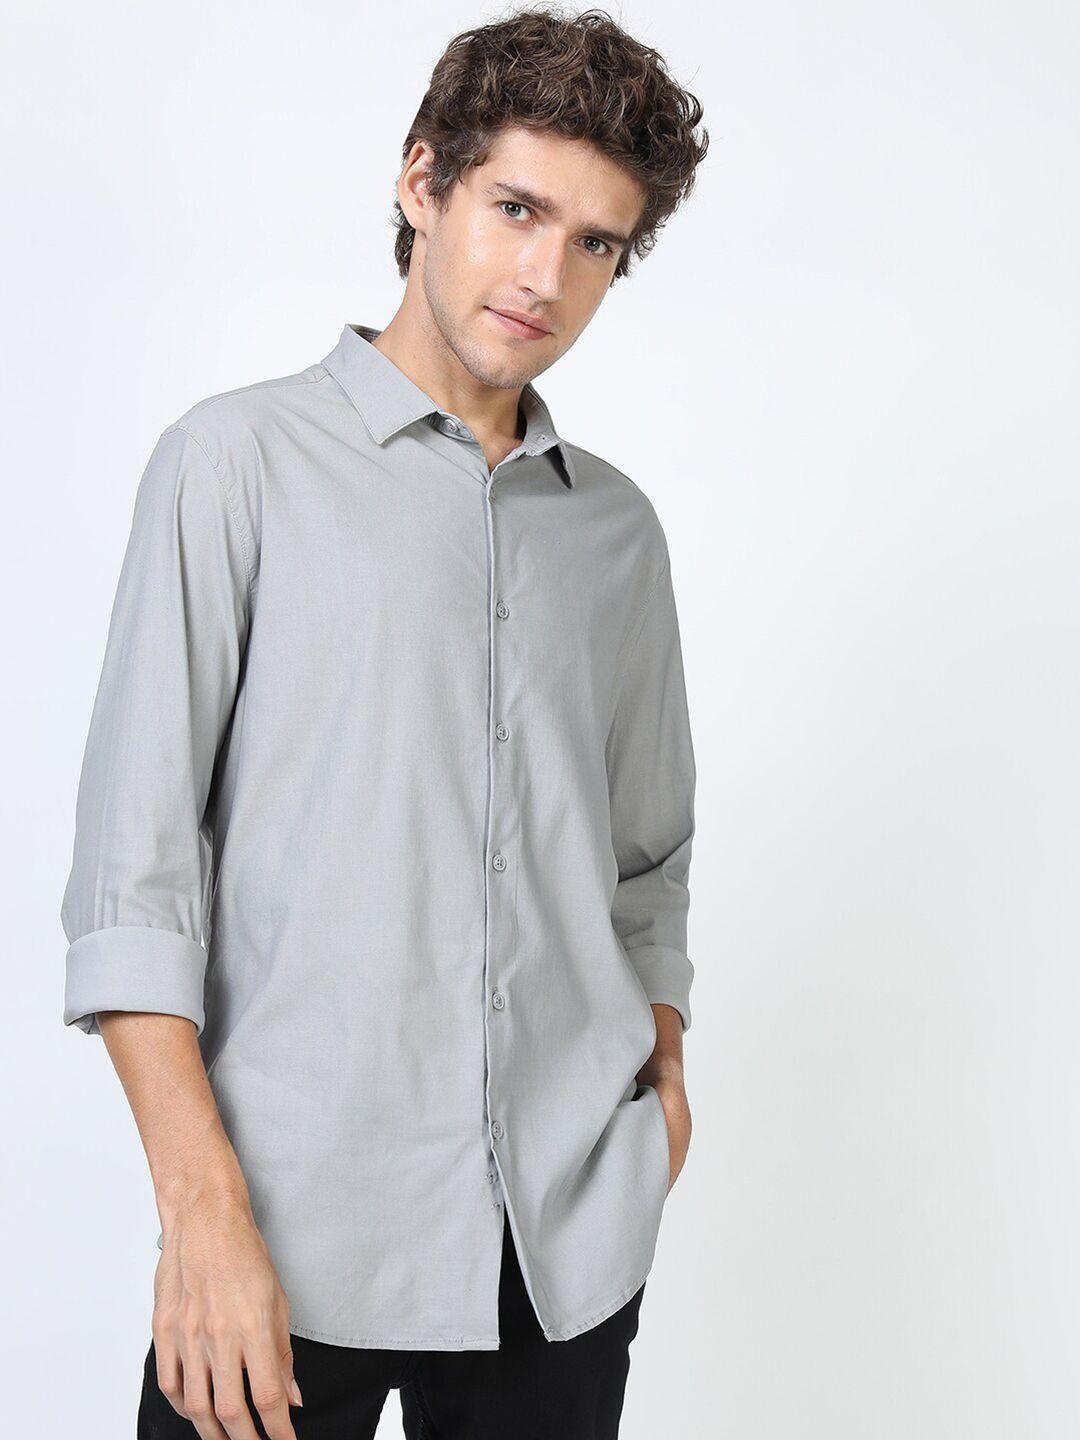 ketch-men-grey-solid-slim-fit-casual-shirt